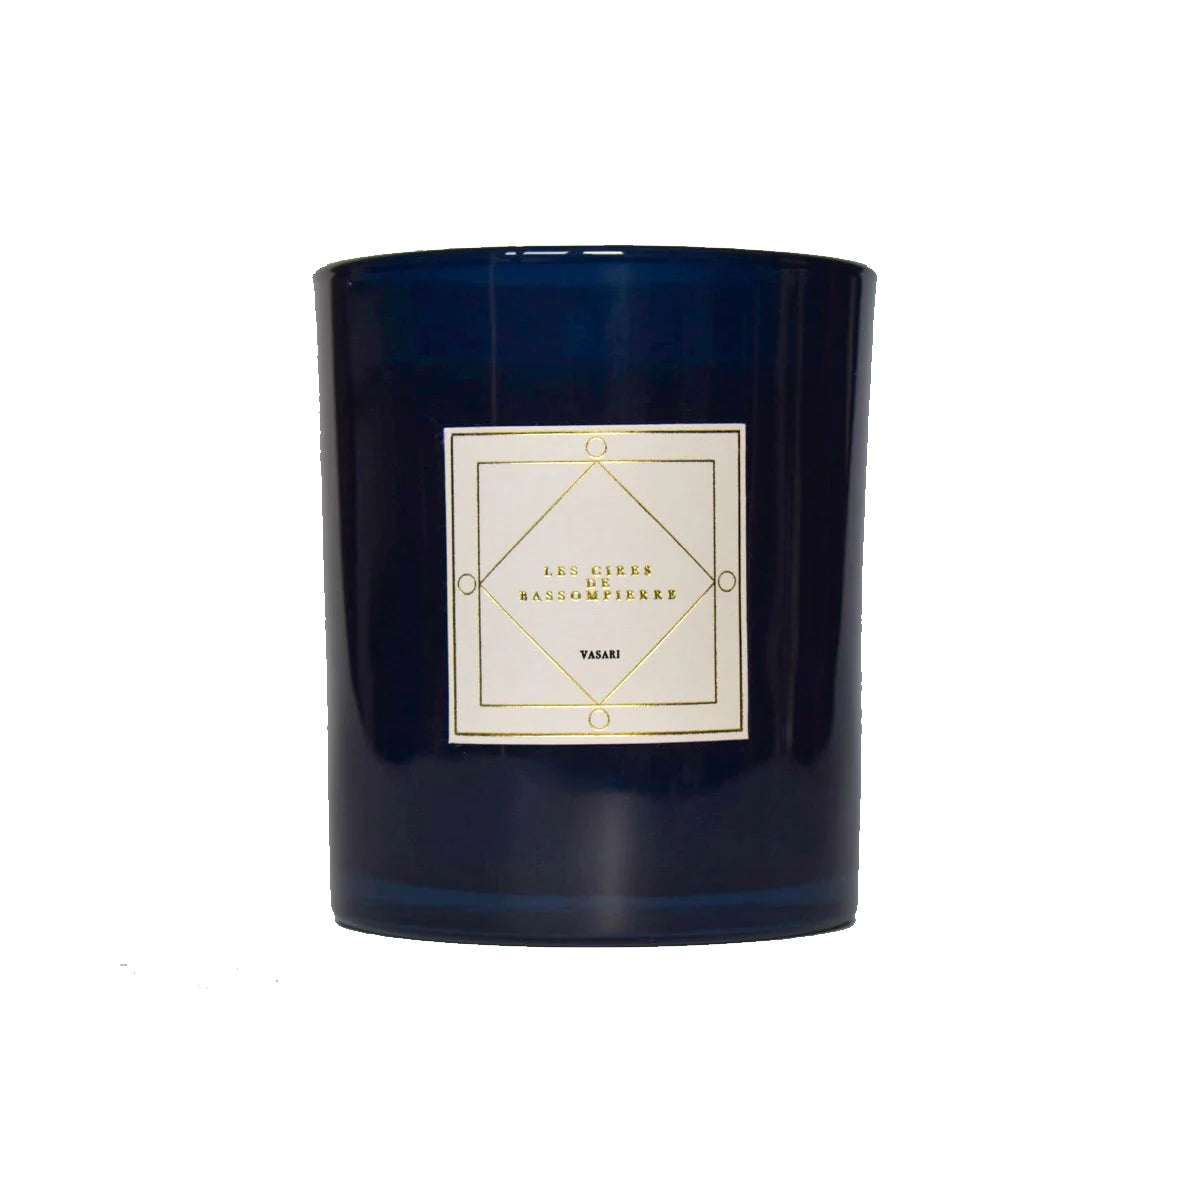 Vitruvius - scented candle